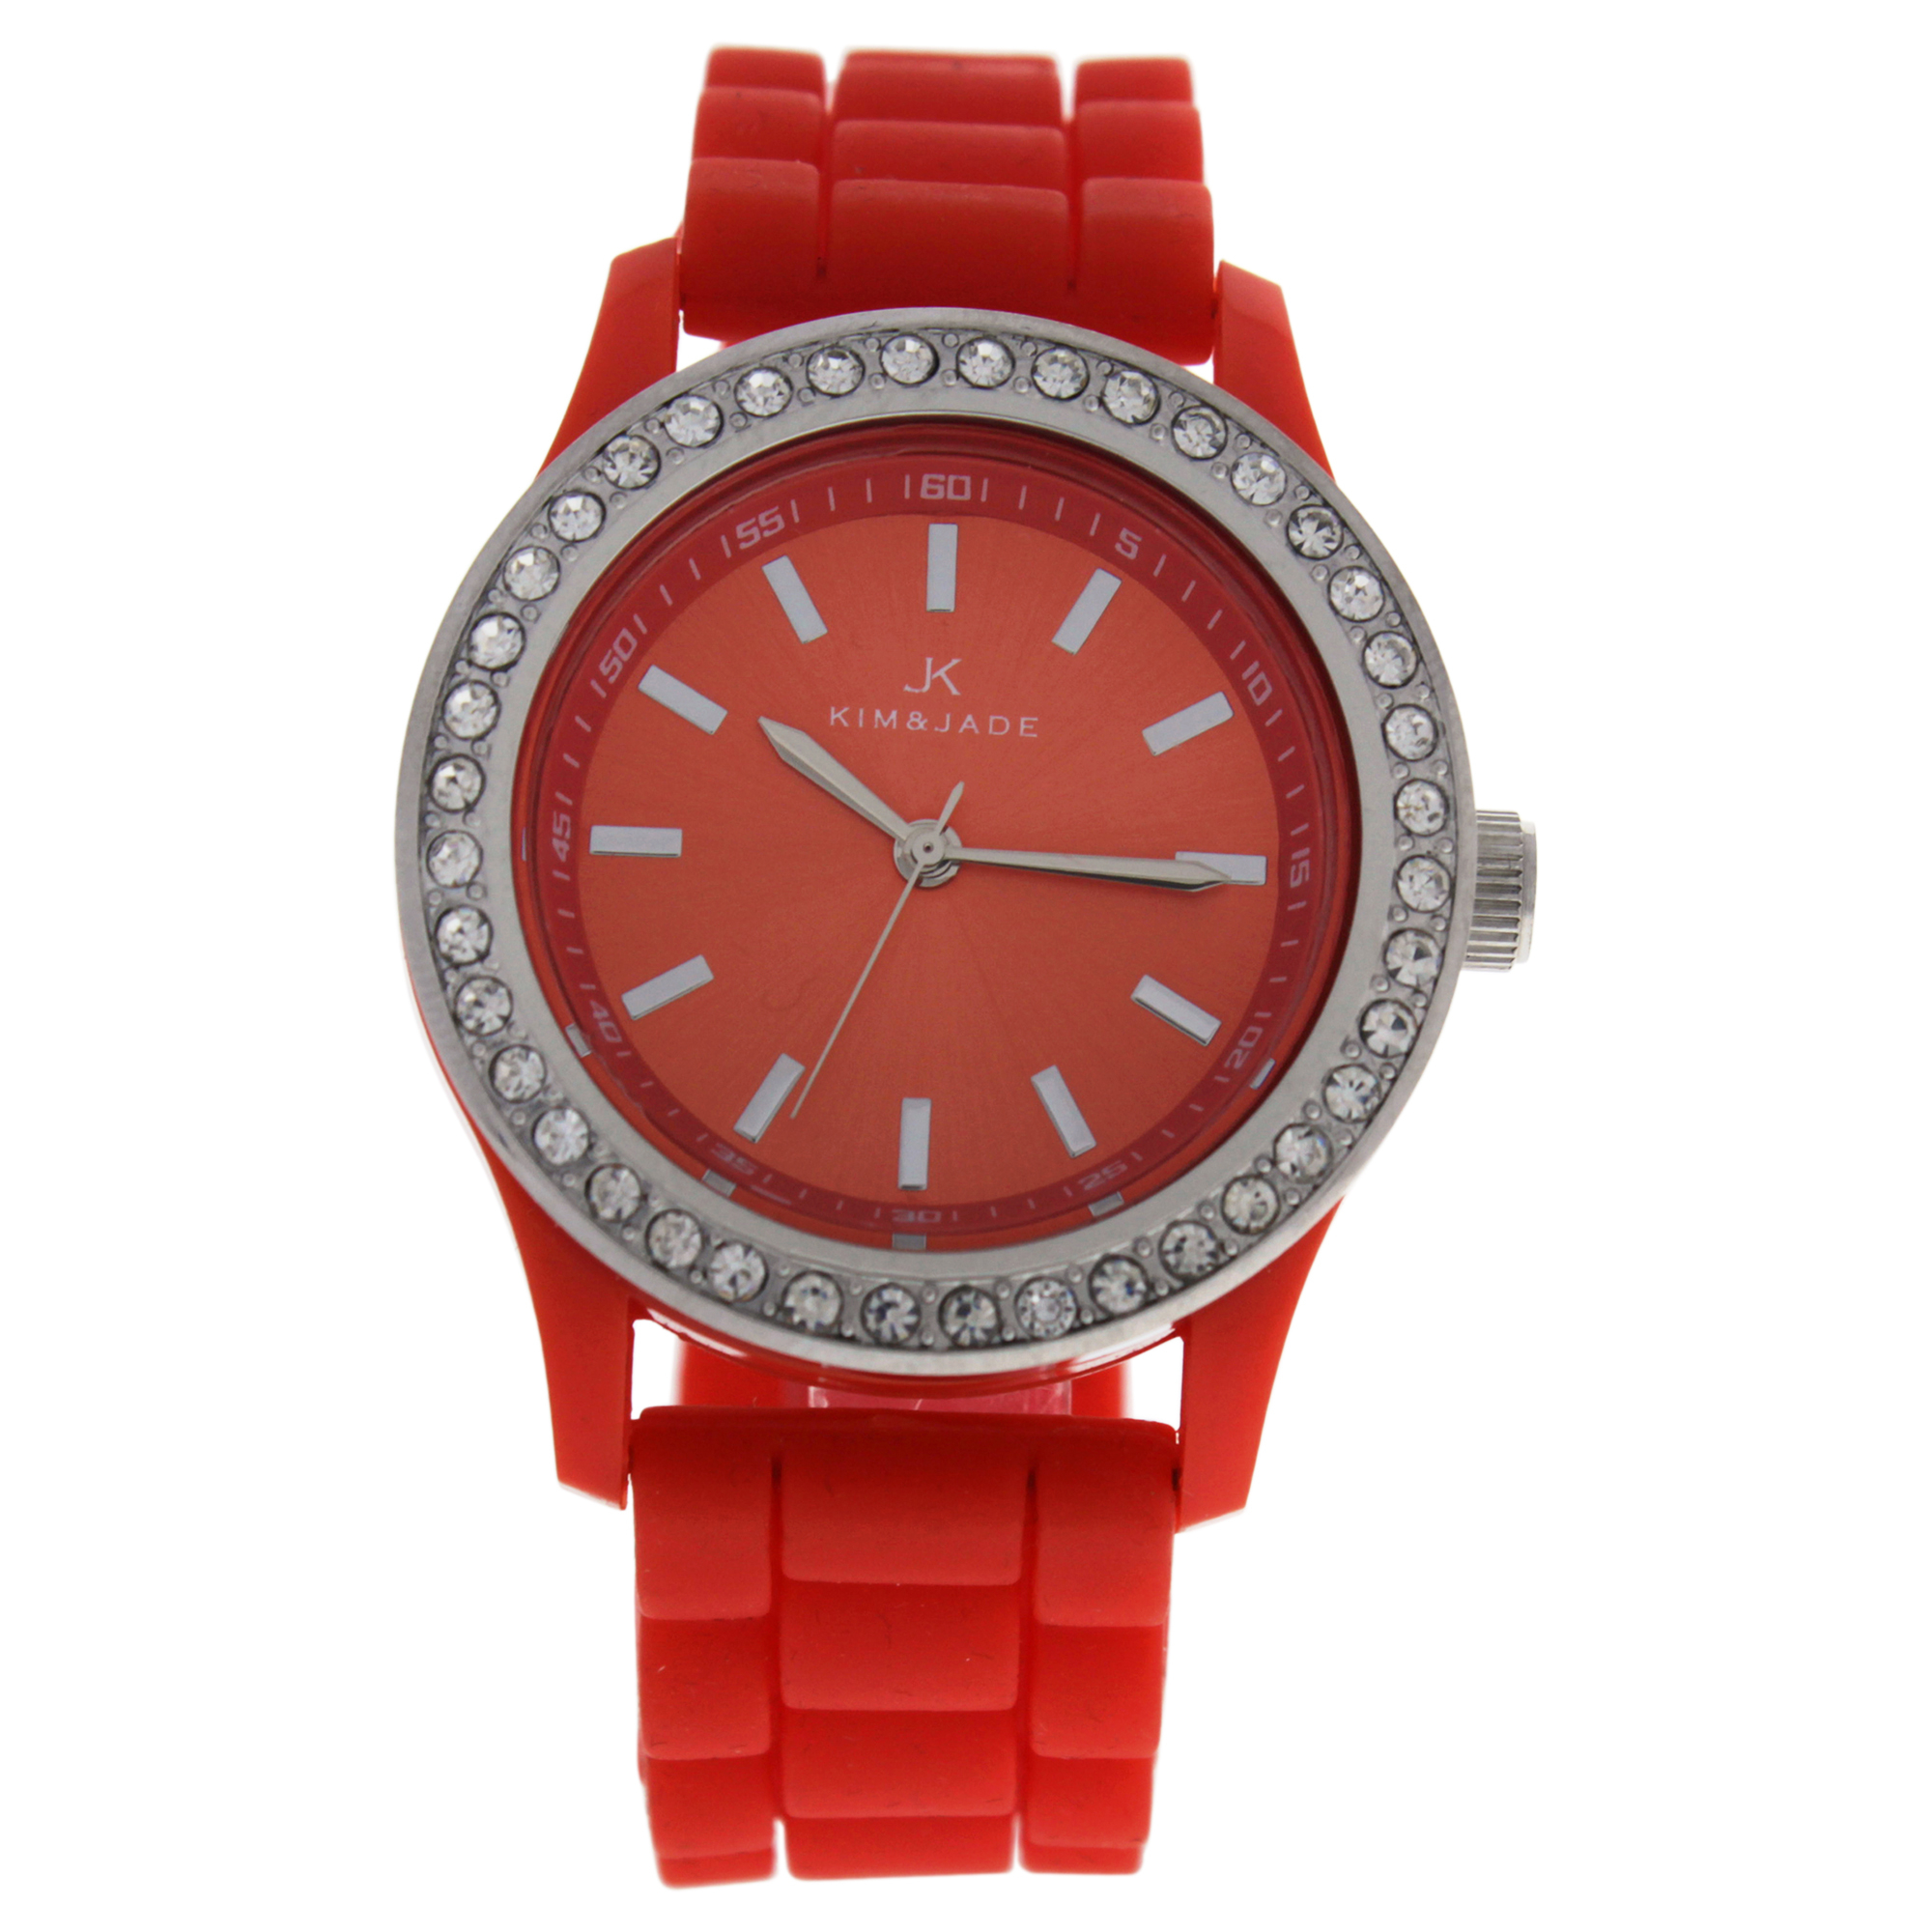 2032L-R Orange Silicone Strap Watch by Kim & Jade for Women - 1 Pc Watch